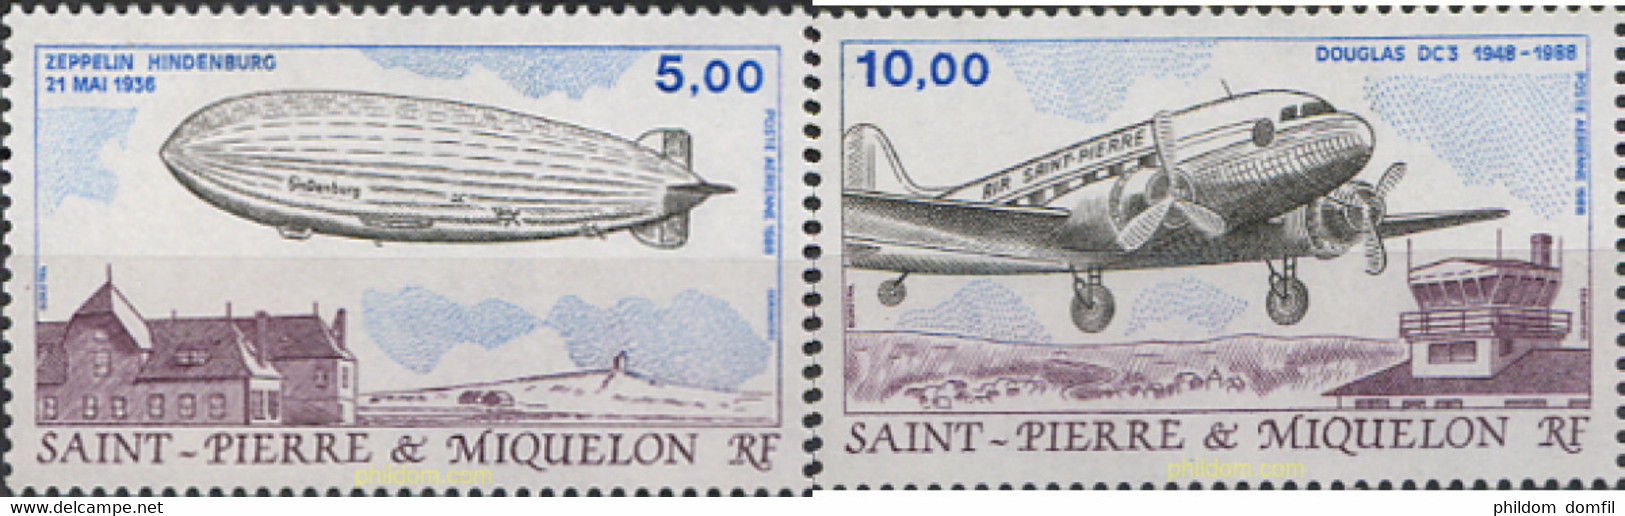 161342 MNH SAN PEDRO Y MIQUELON 1988 TRANSPORTES AEREOS - Used Stamps